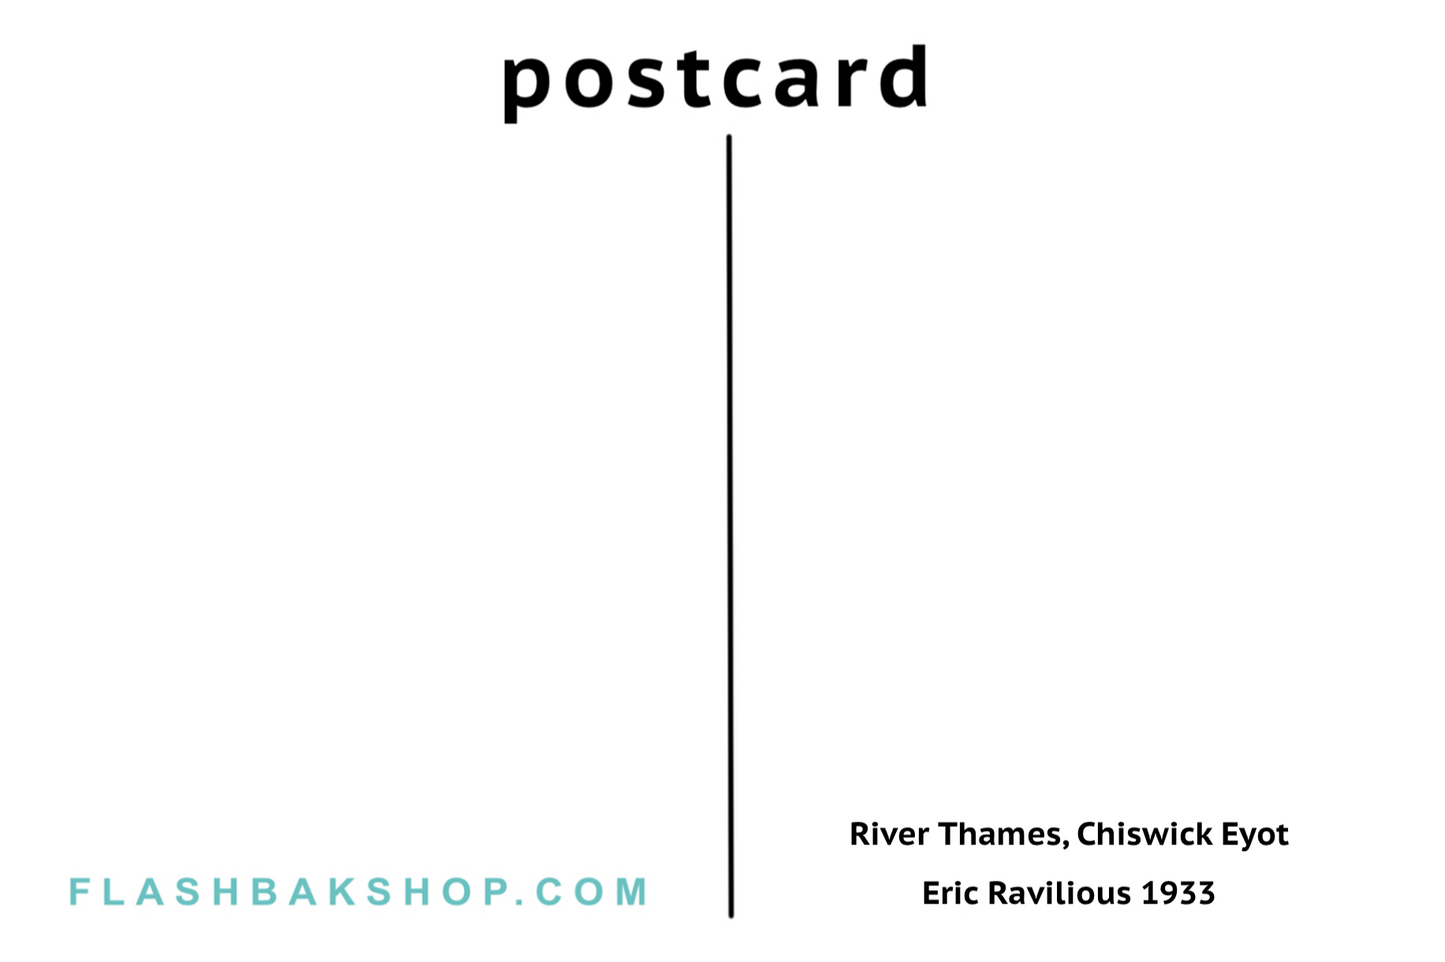 Tamise, Chiswick Eyot par Eric Ravilious, 1933 - Carte postale